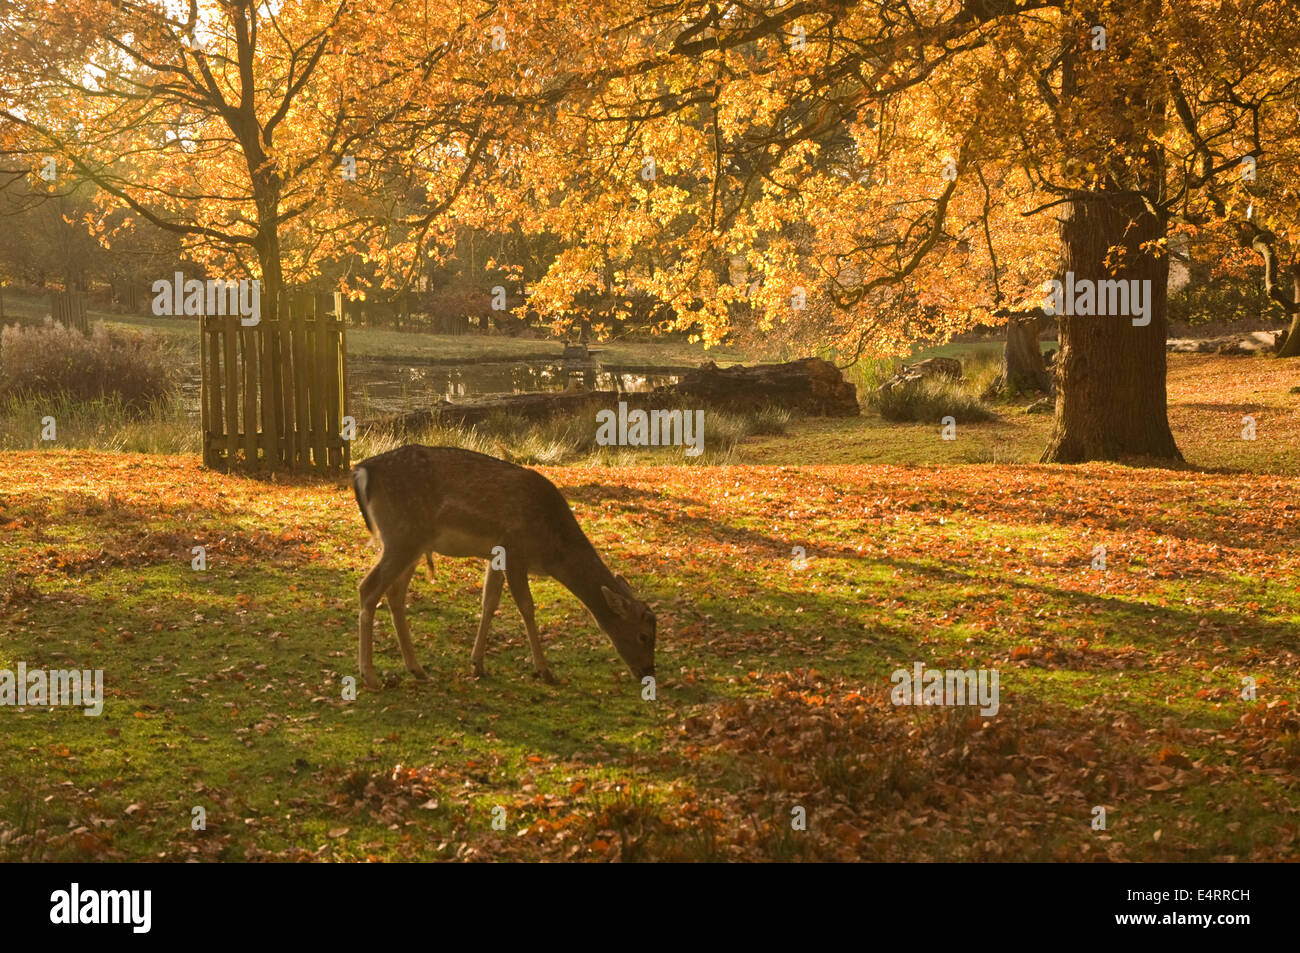 UK, Cheshire, Dunham Massey Park, autumn foliage and deer in warm sunlight Stock Photo